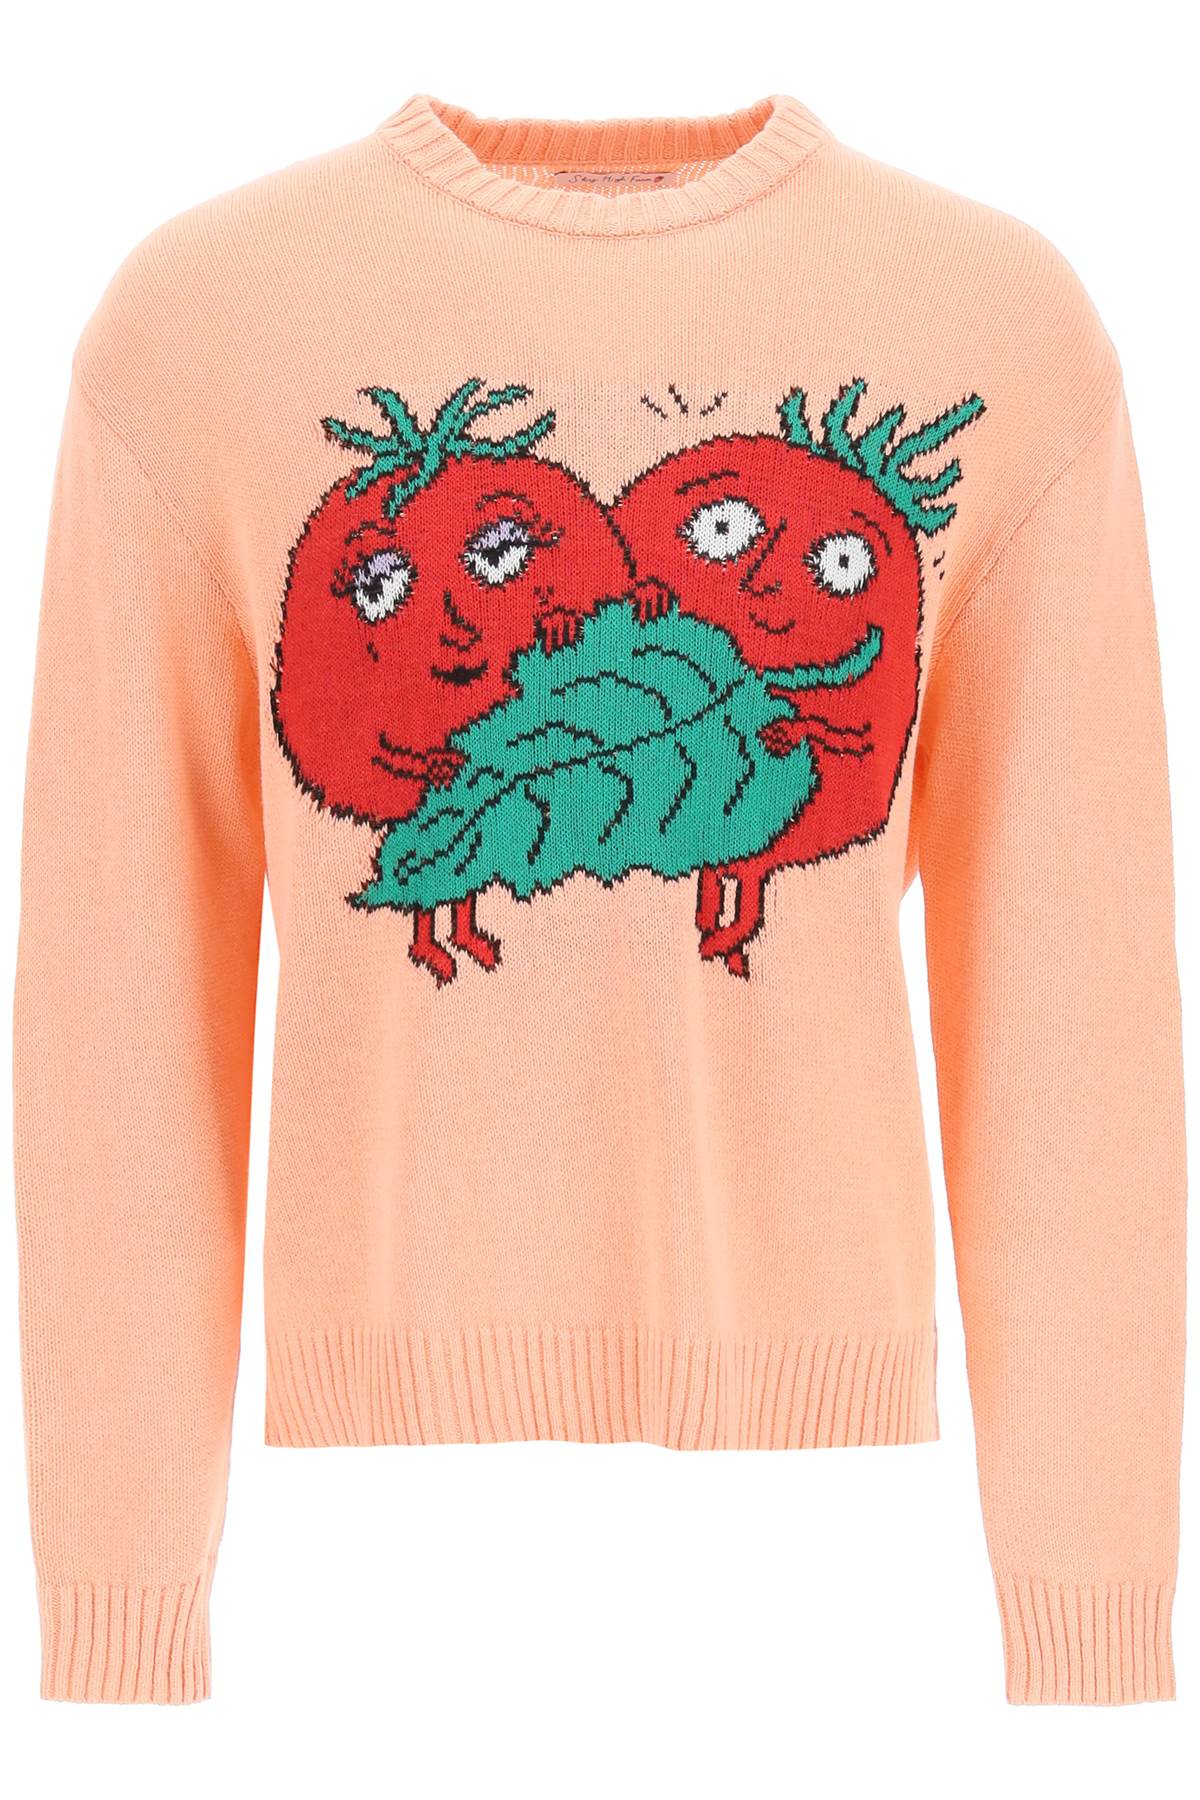 happy Tomatoes Cotton Sweater